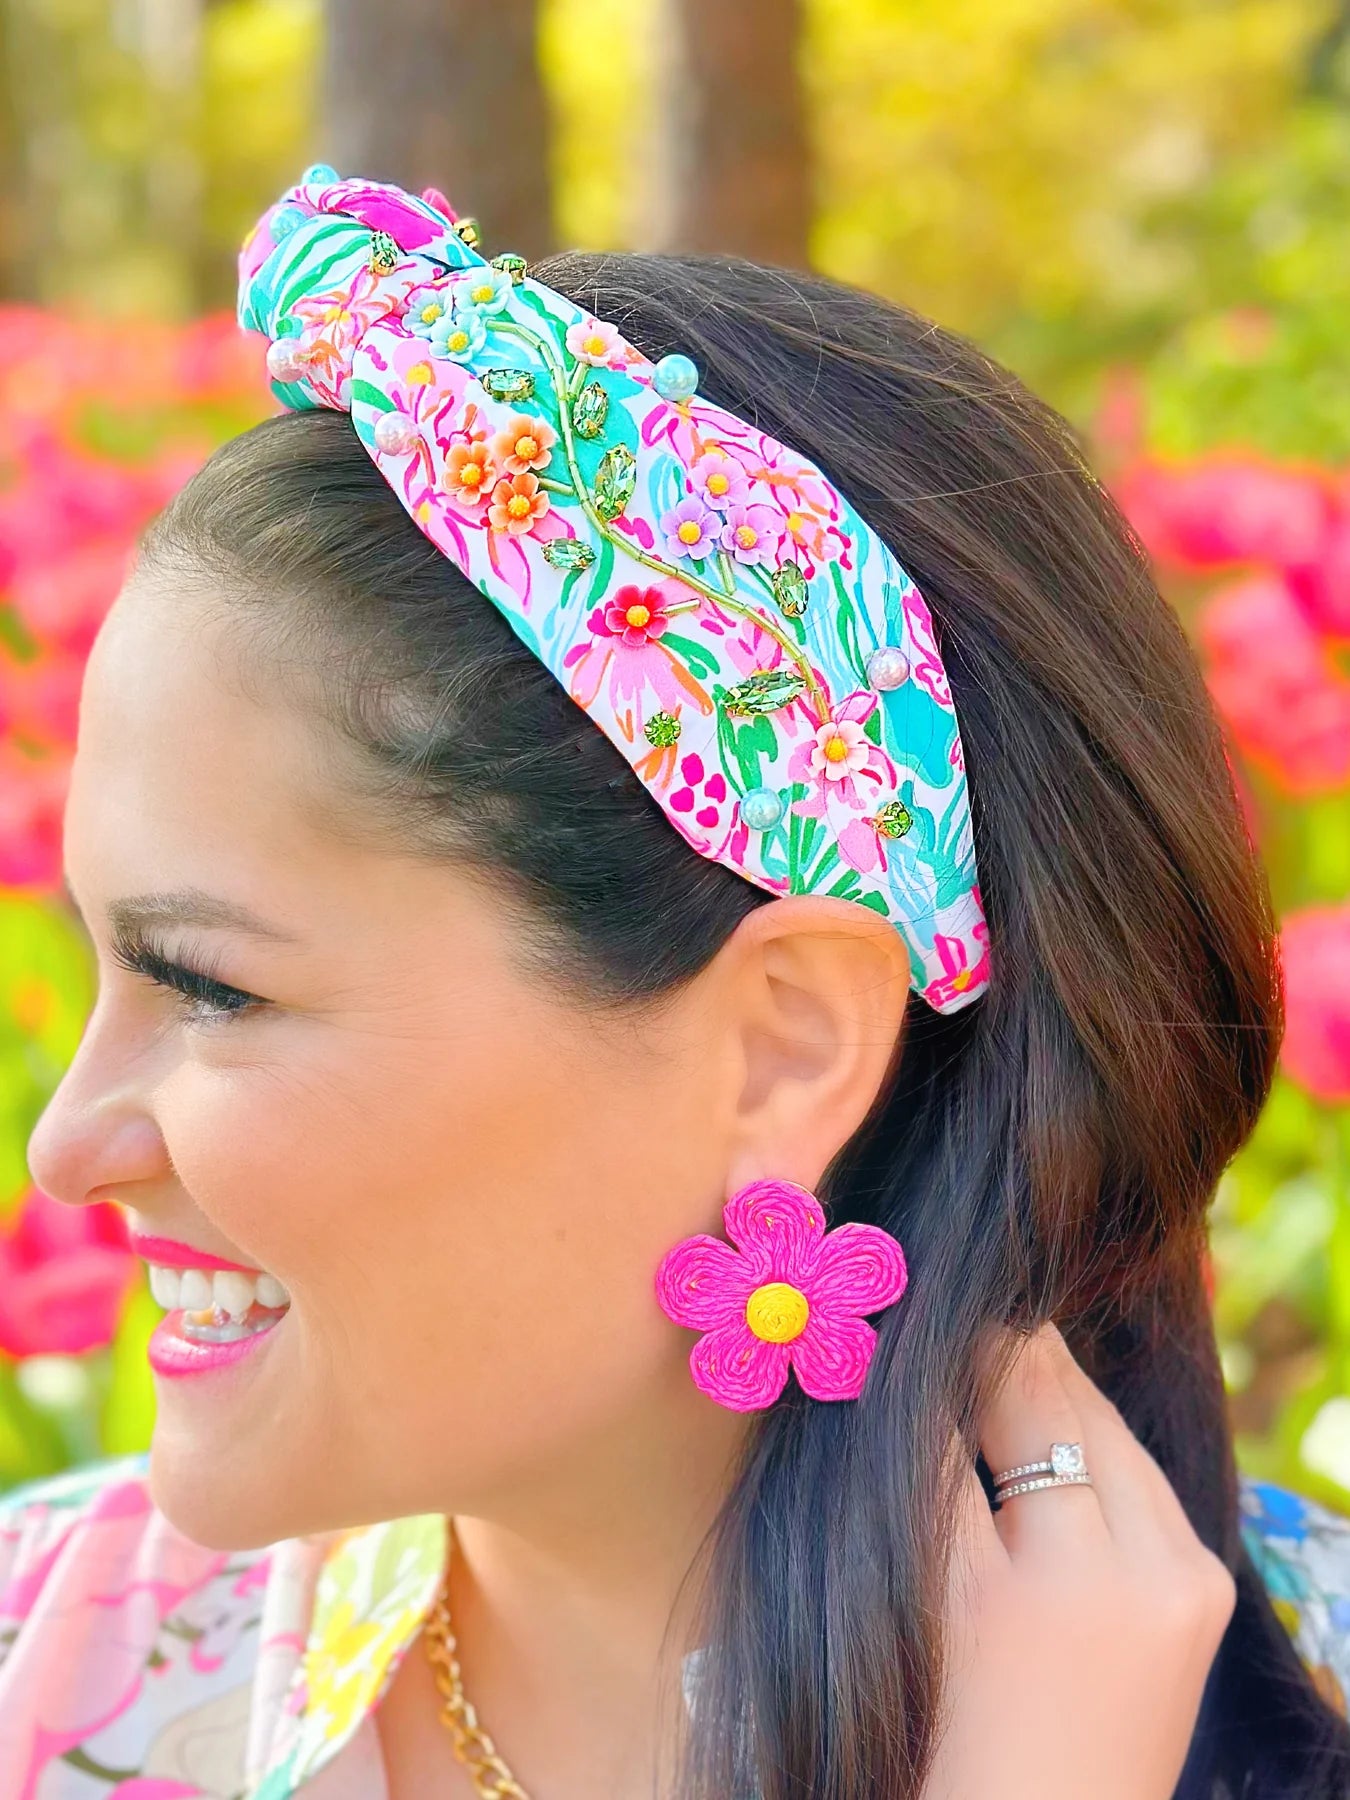 Brianna Cannon Spring Flower Garden Adult Headband W/ Crystals & Pearls